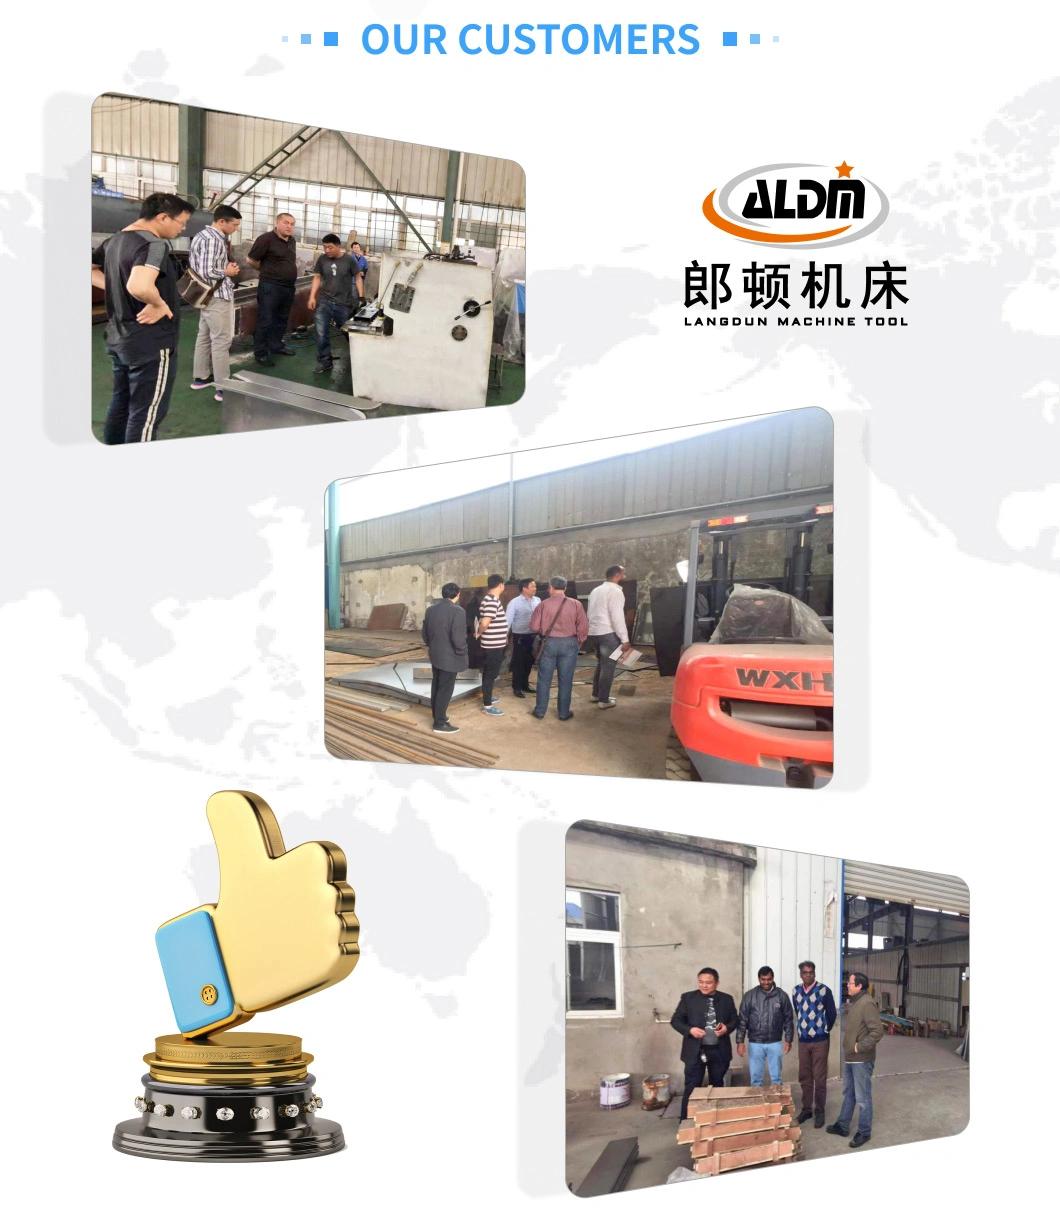 New Aldm CE Approved Hydraulic Steel Coil Cutting Shearing Machine Price CNC 6mm*2500mm